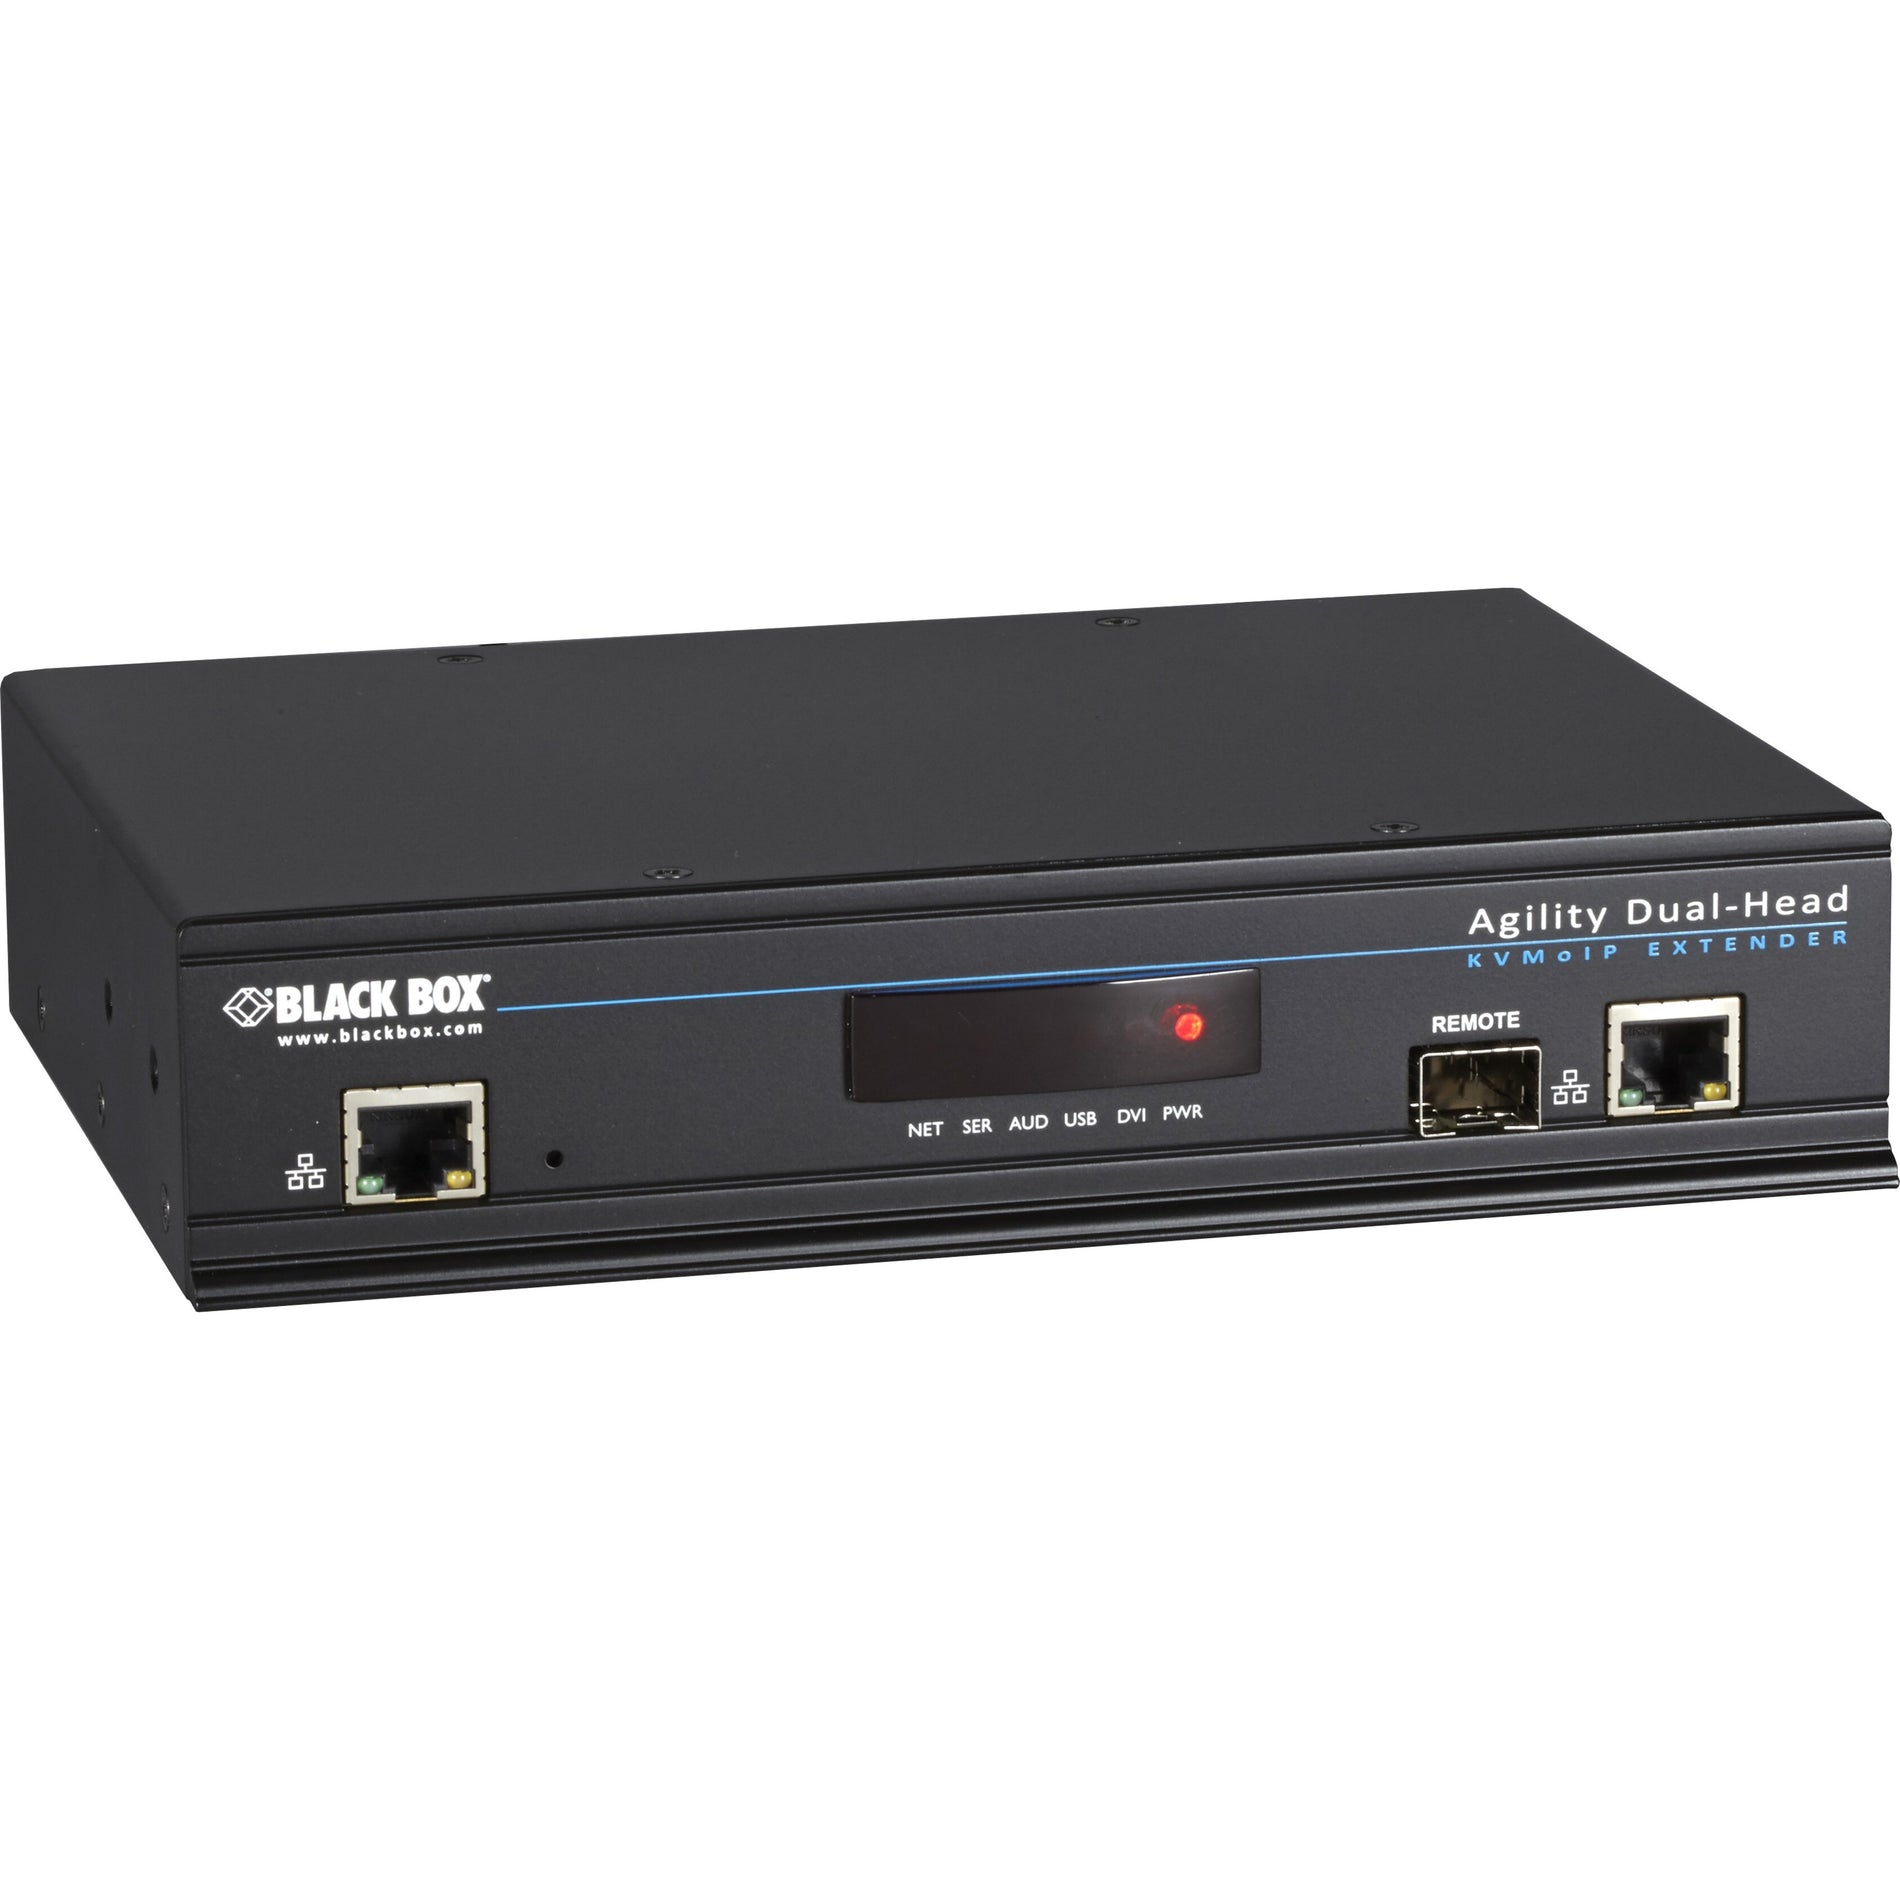 Black Box ACR1020A-R Agility KVM-Over-IP Matrix, Dual-Head DVI-D, USB 2.0, KVM Receiver, Full HD, 1920 x 1080